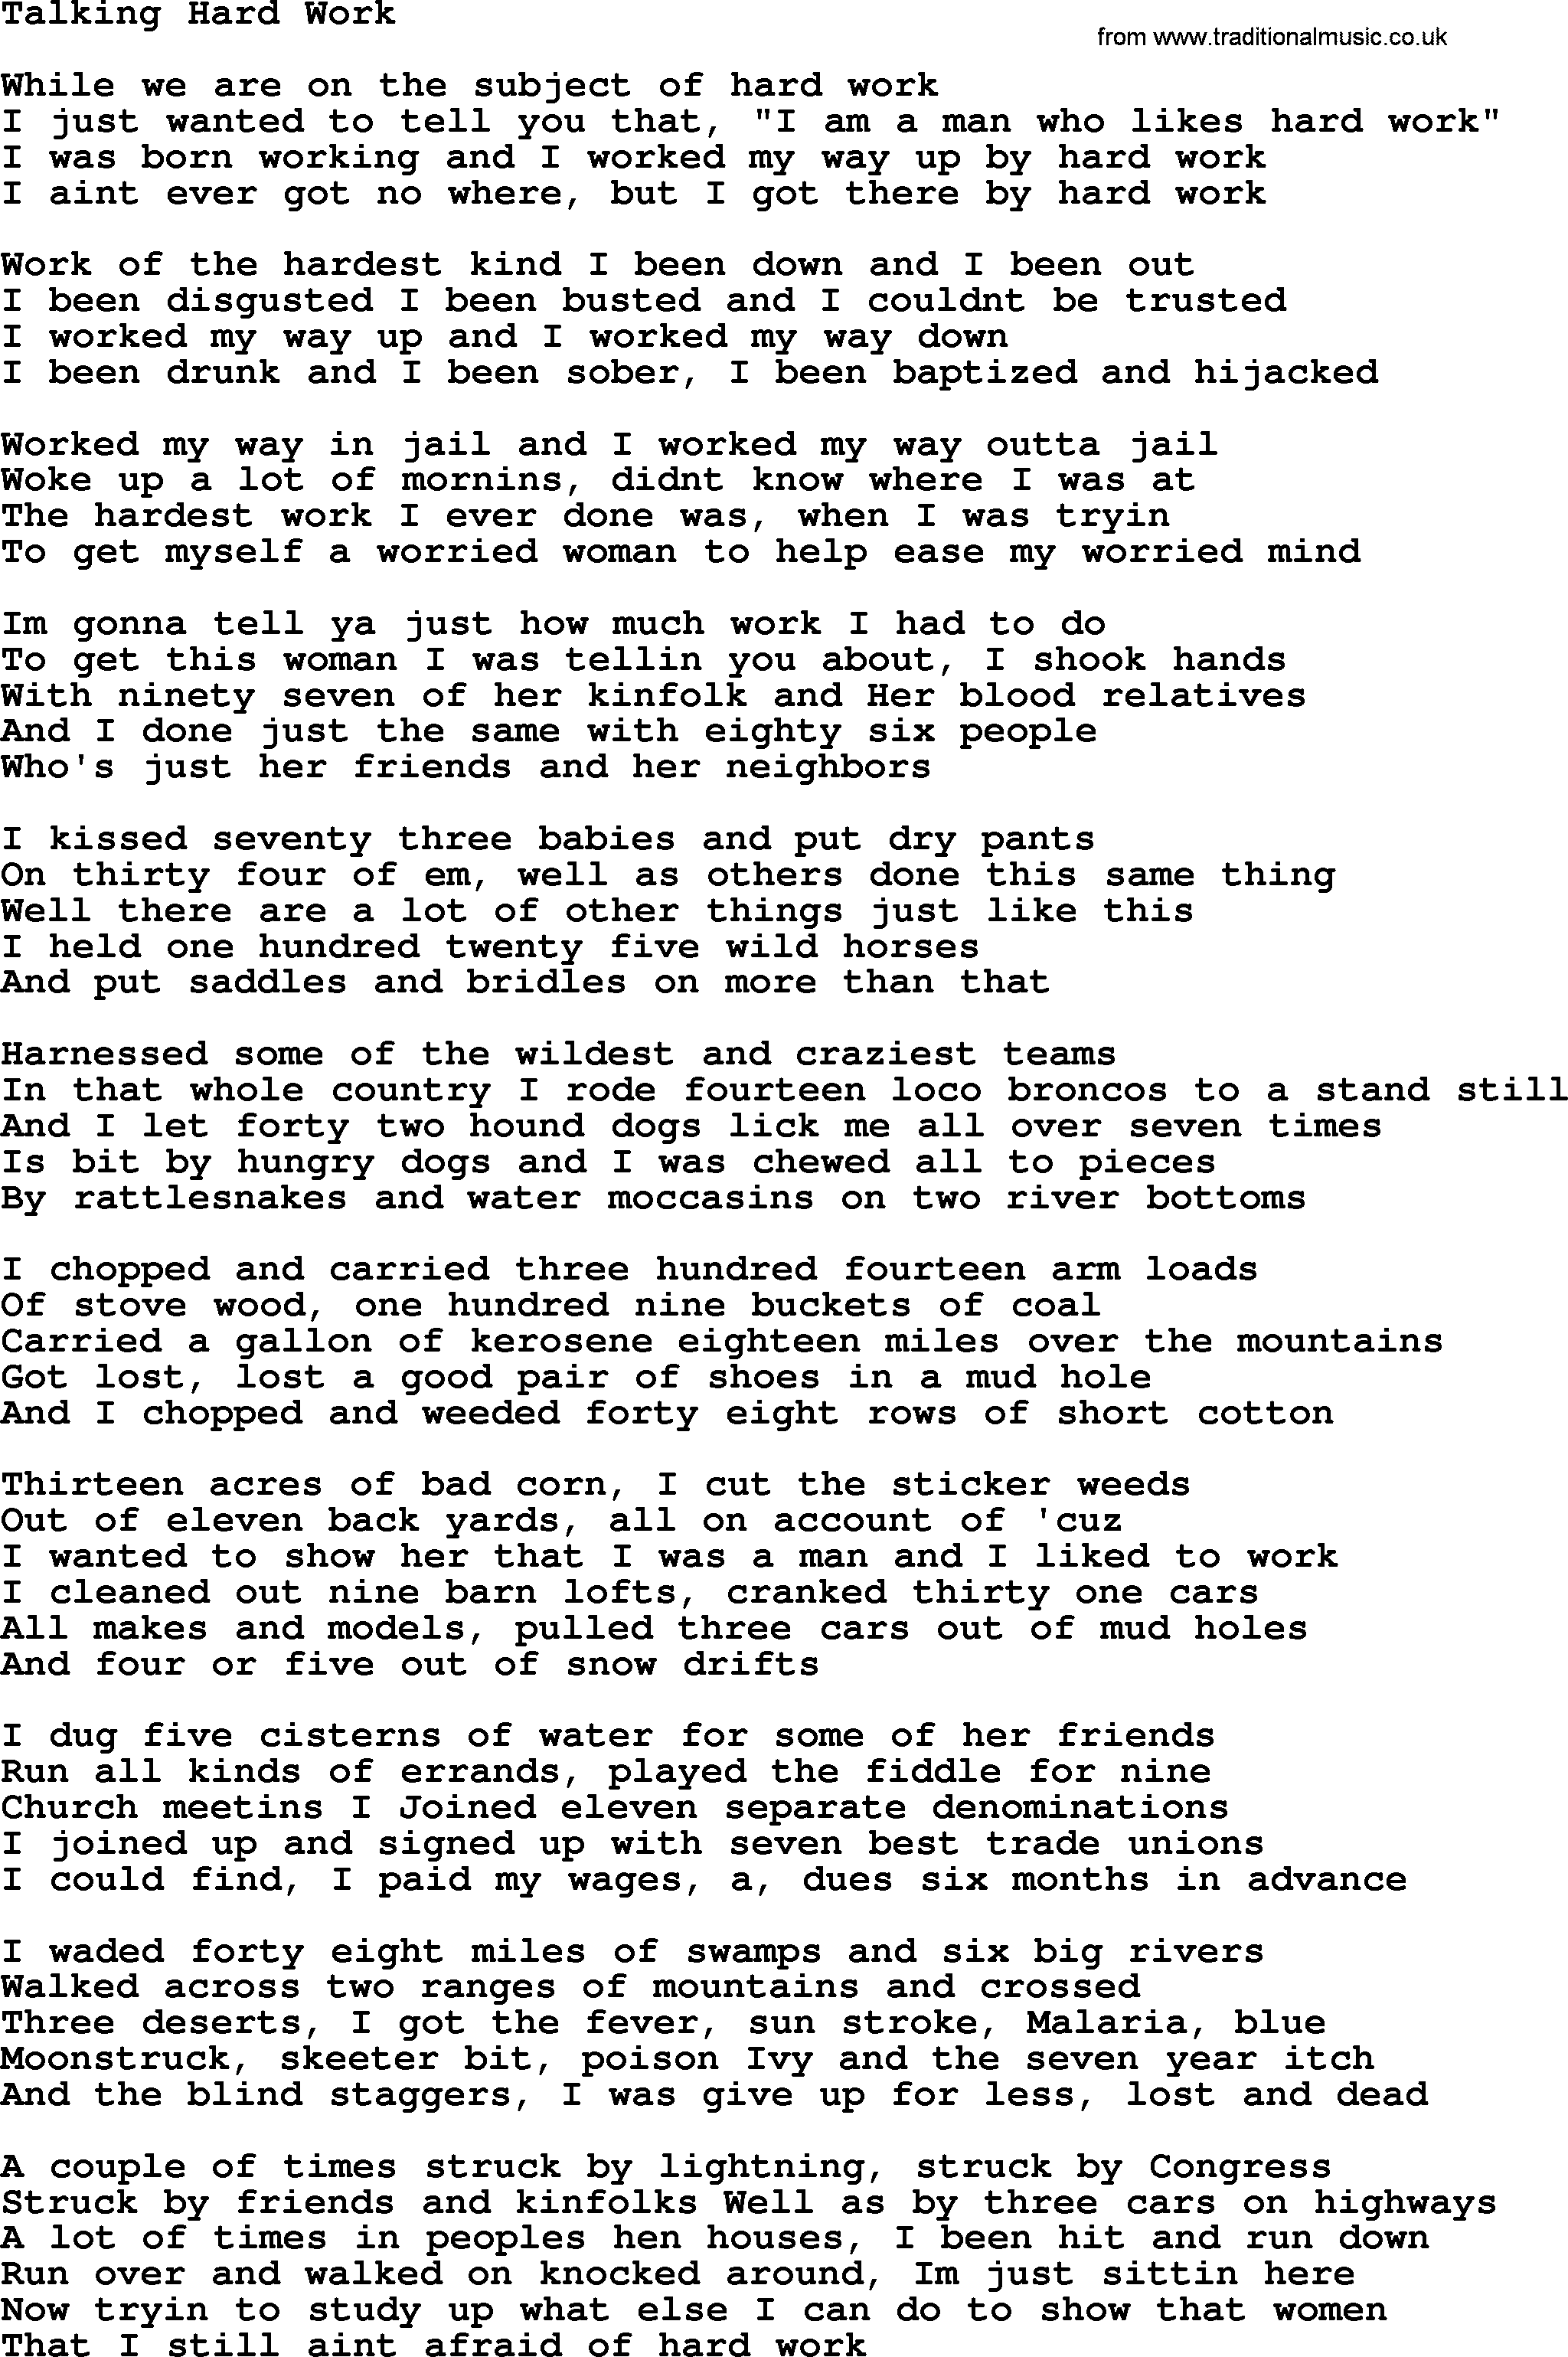 Woody Guthrie song Talking Hard Work lyrics